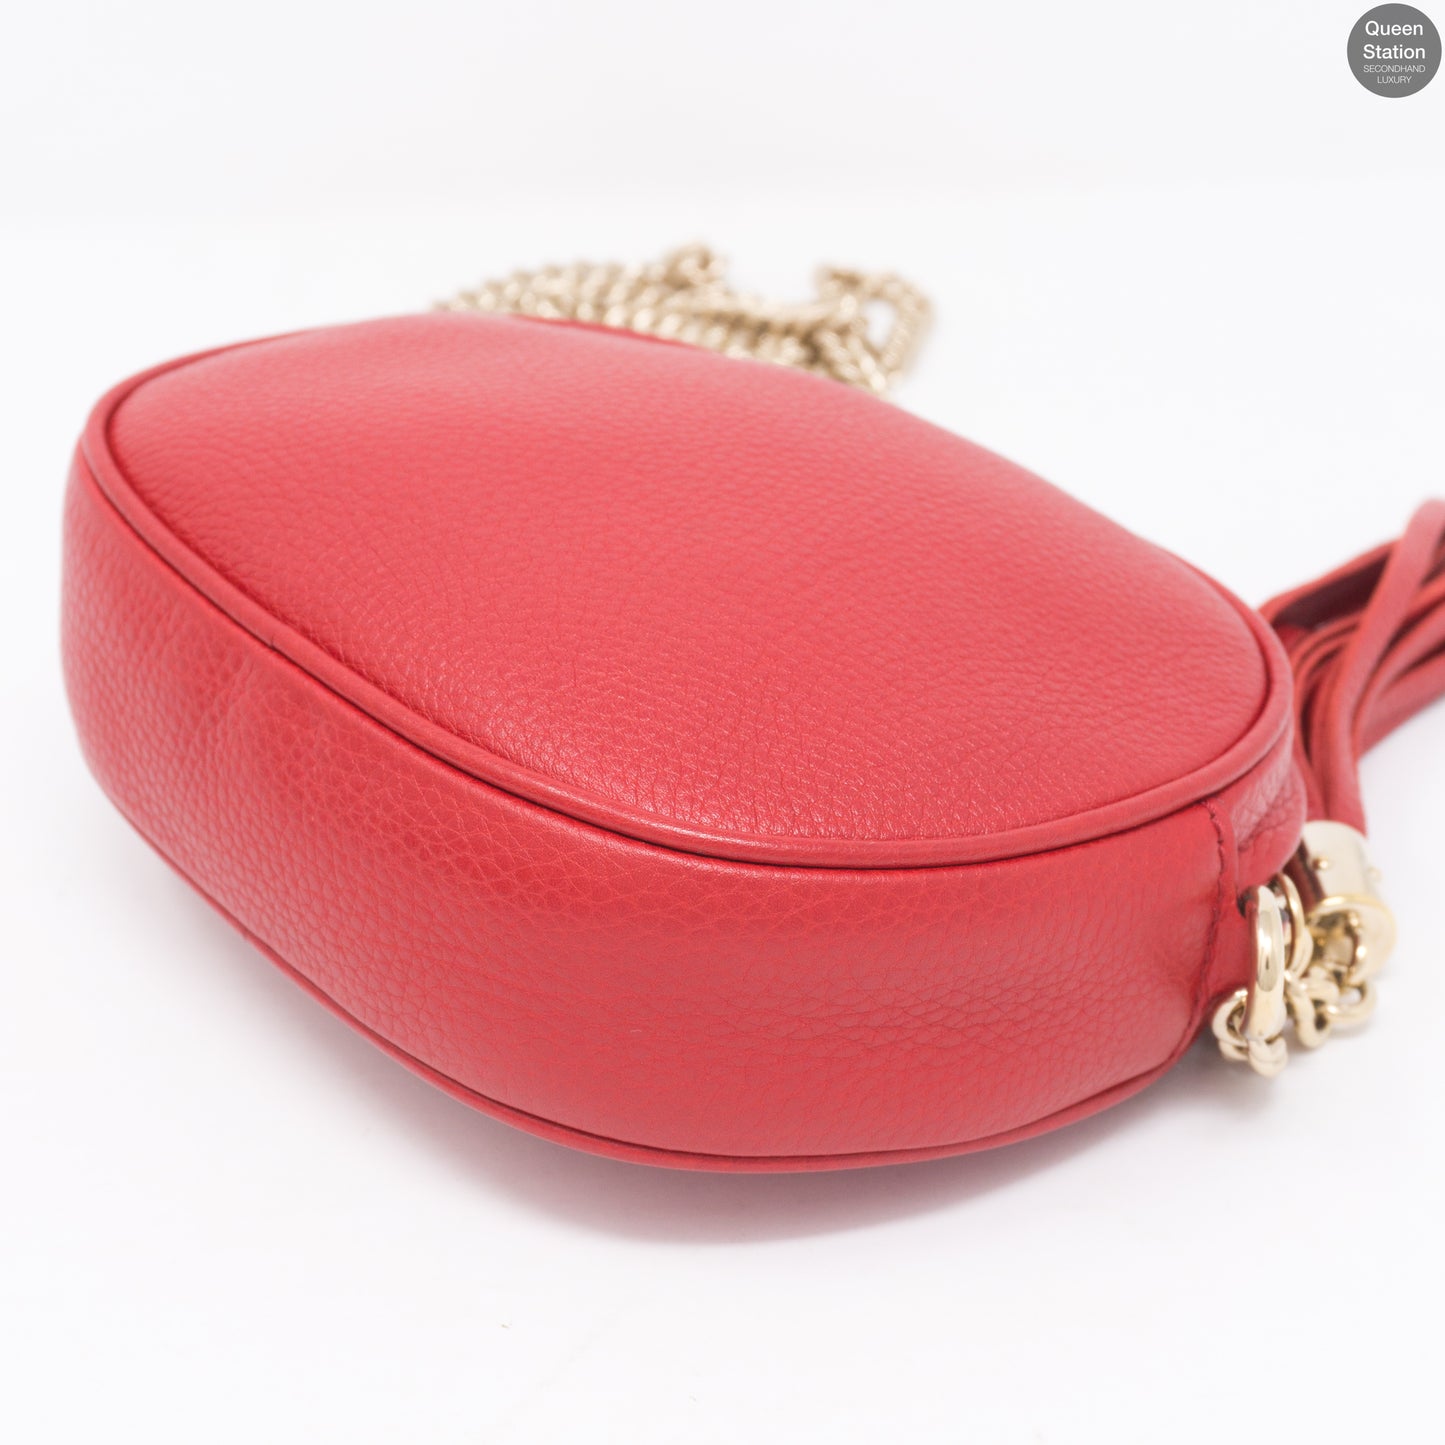 Soho Mini Chain Bag Red Leather